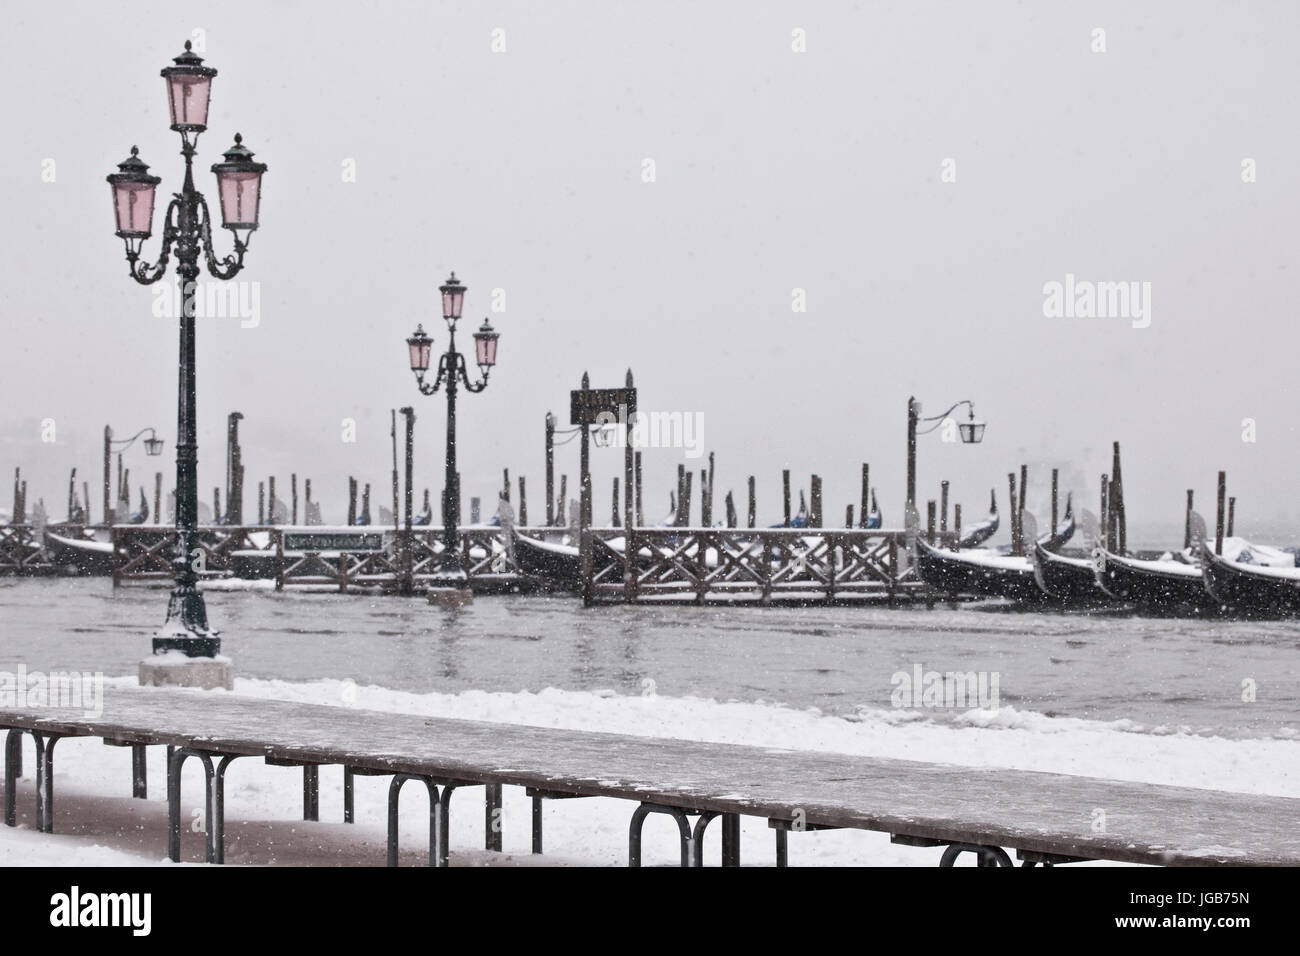 High tide in Venice, Italy. Stock Photo